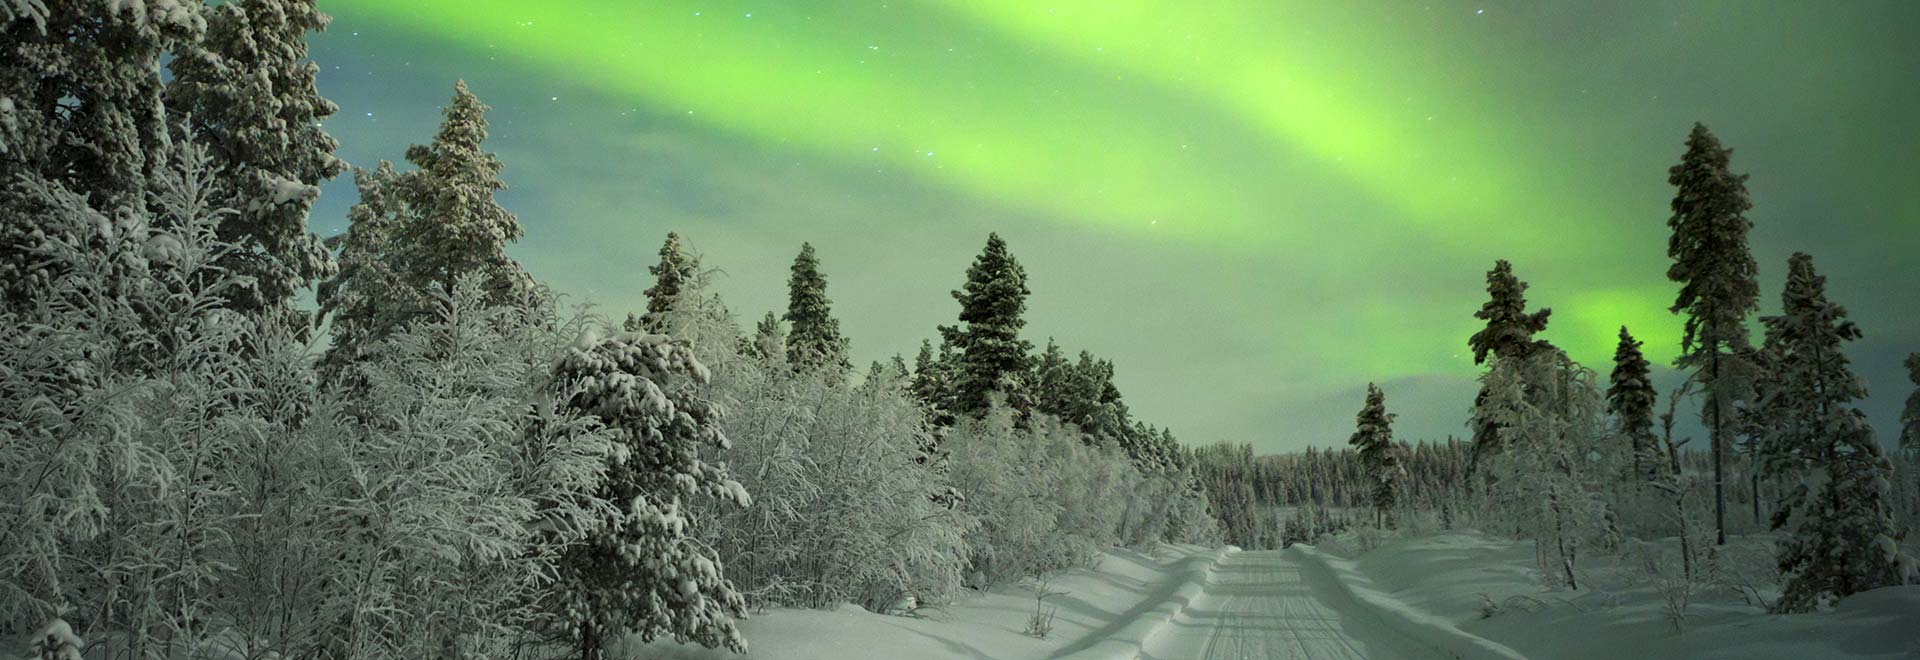 Europe Finland Winter Northern Lights Forest m